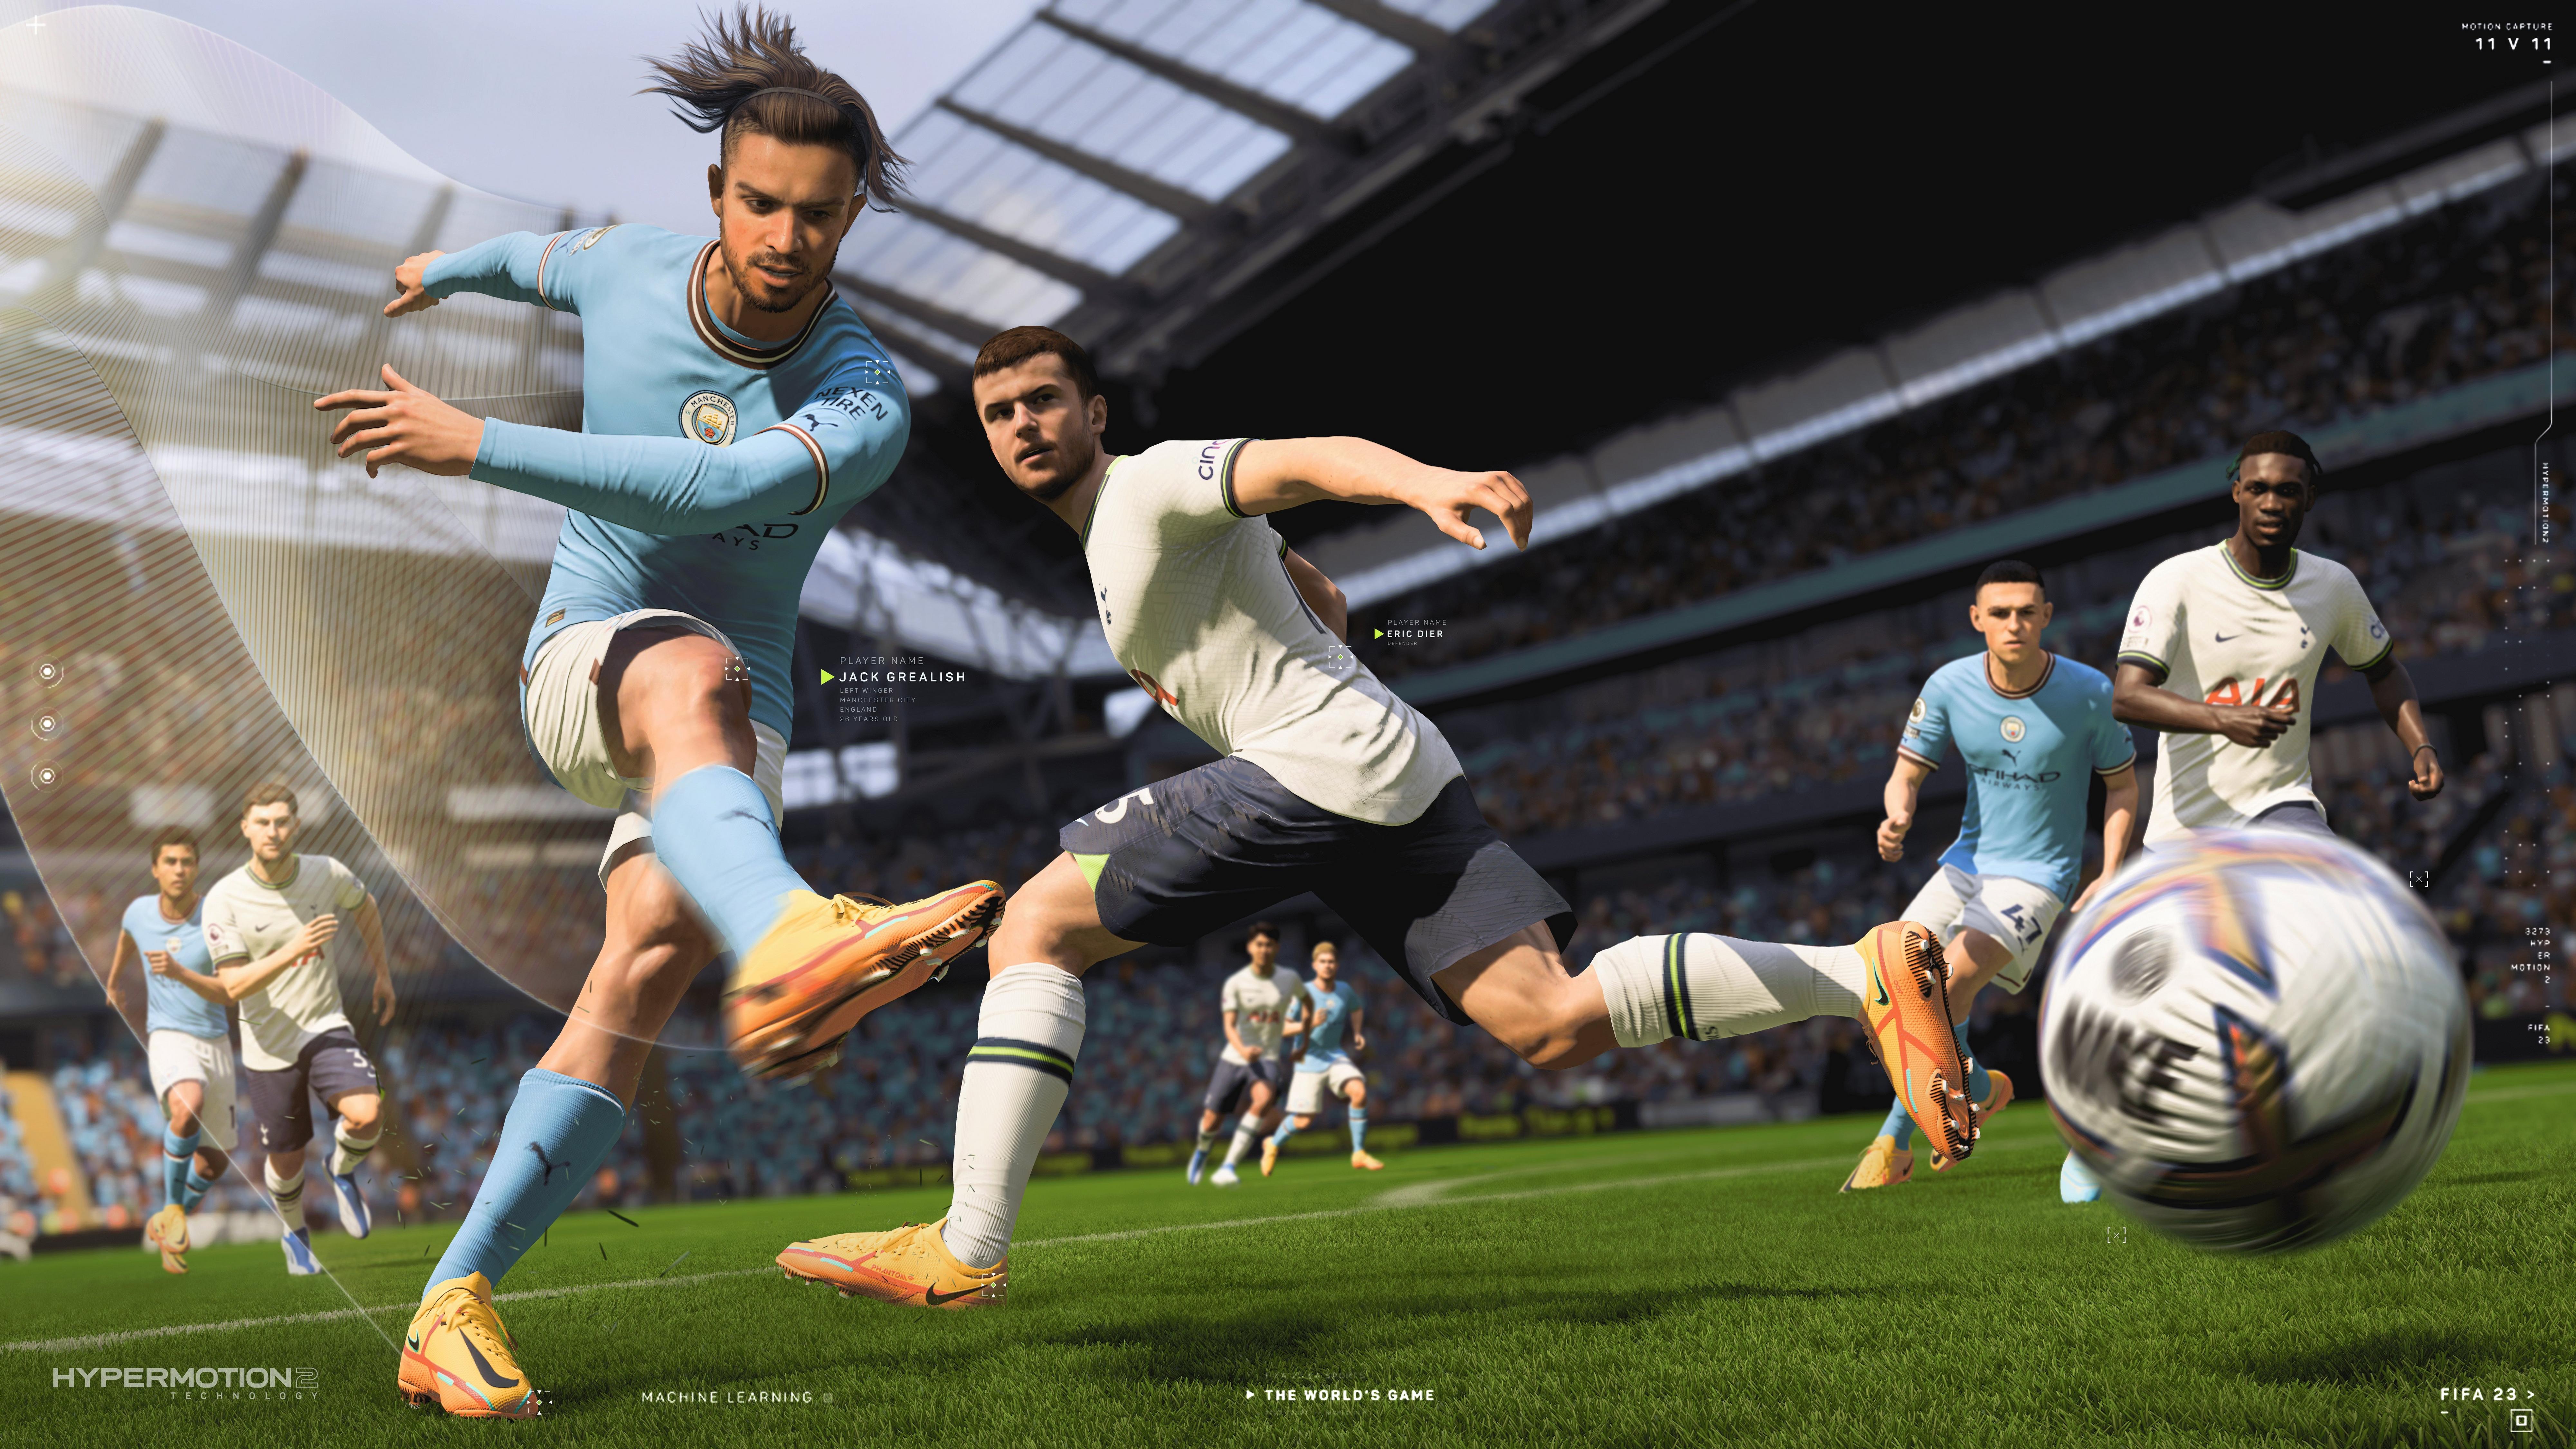 FIFA 23 - (XB1) Xbox One – J&L Video Games New York City